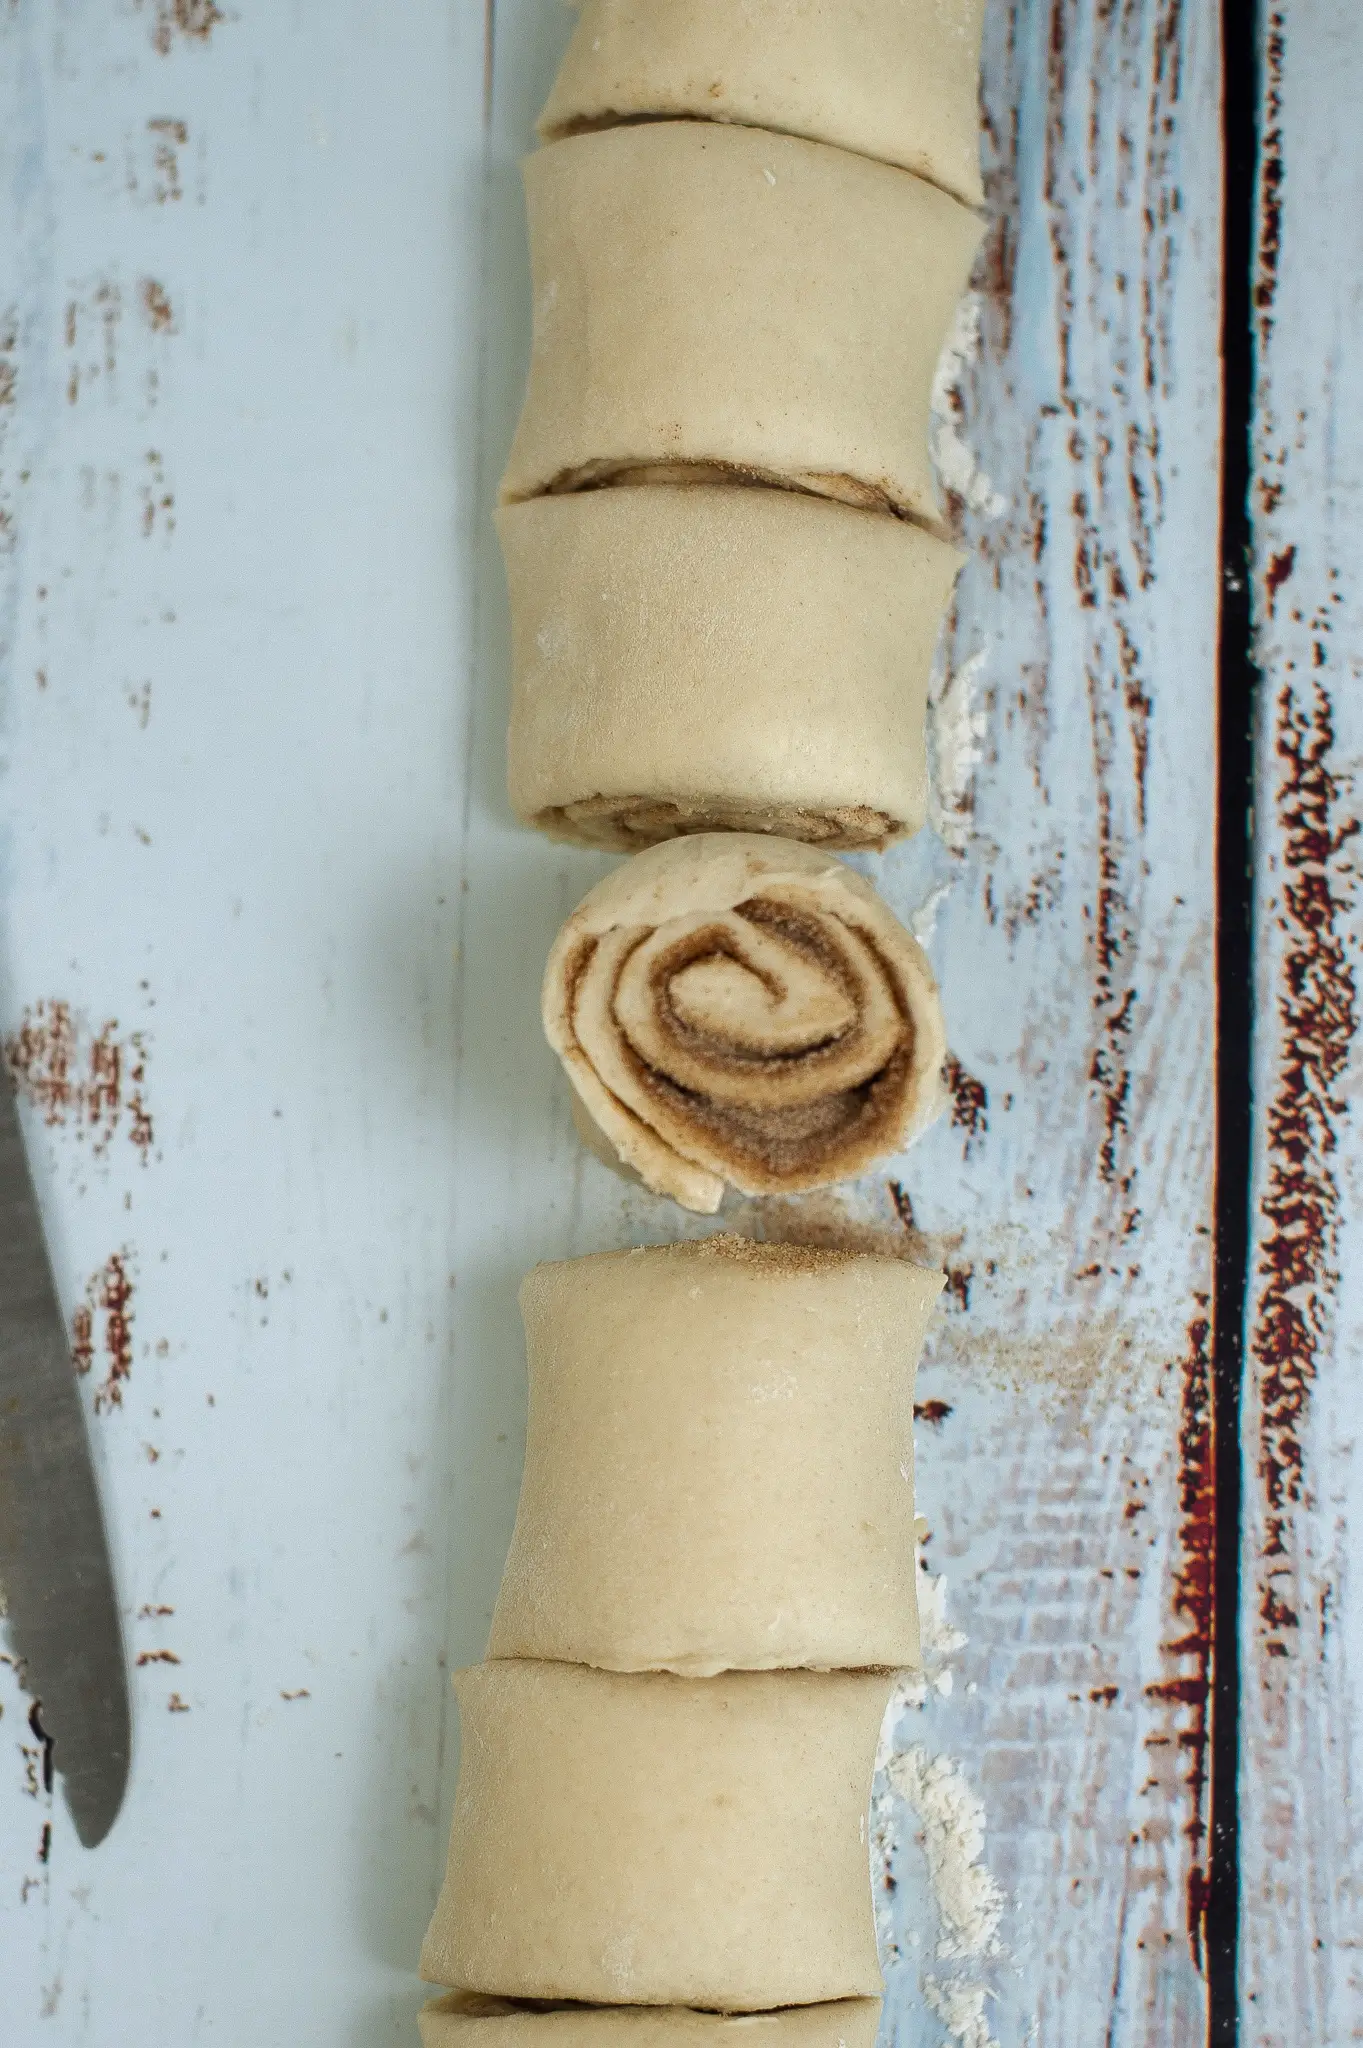 Cinnamon roll dough being cut into individual rolls.